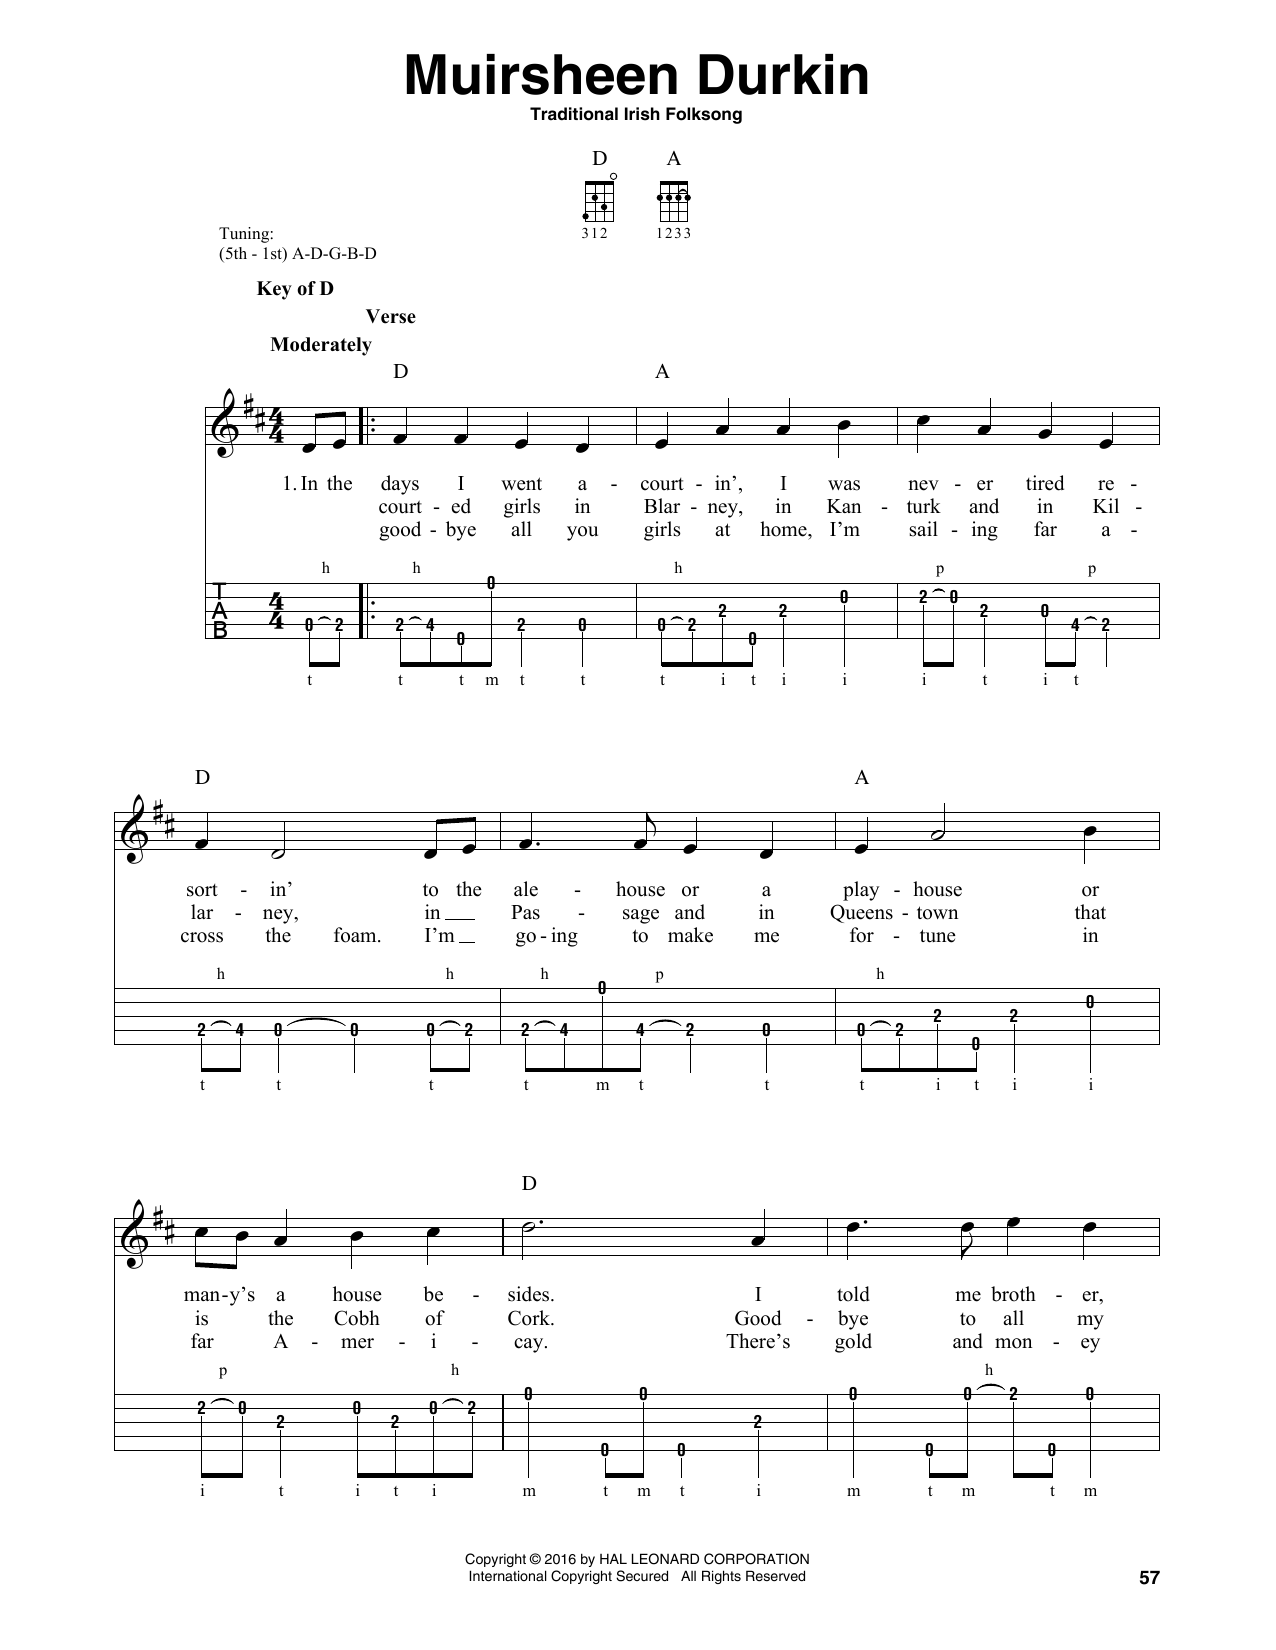 Traditional Irish Folk Song Muirsheen Durkin Sheet Music Notes & Chords for Banjo - Download or Print PDF